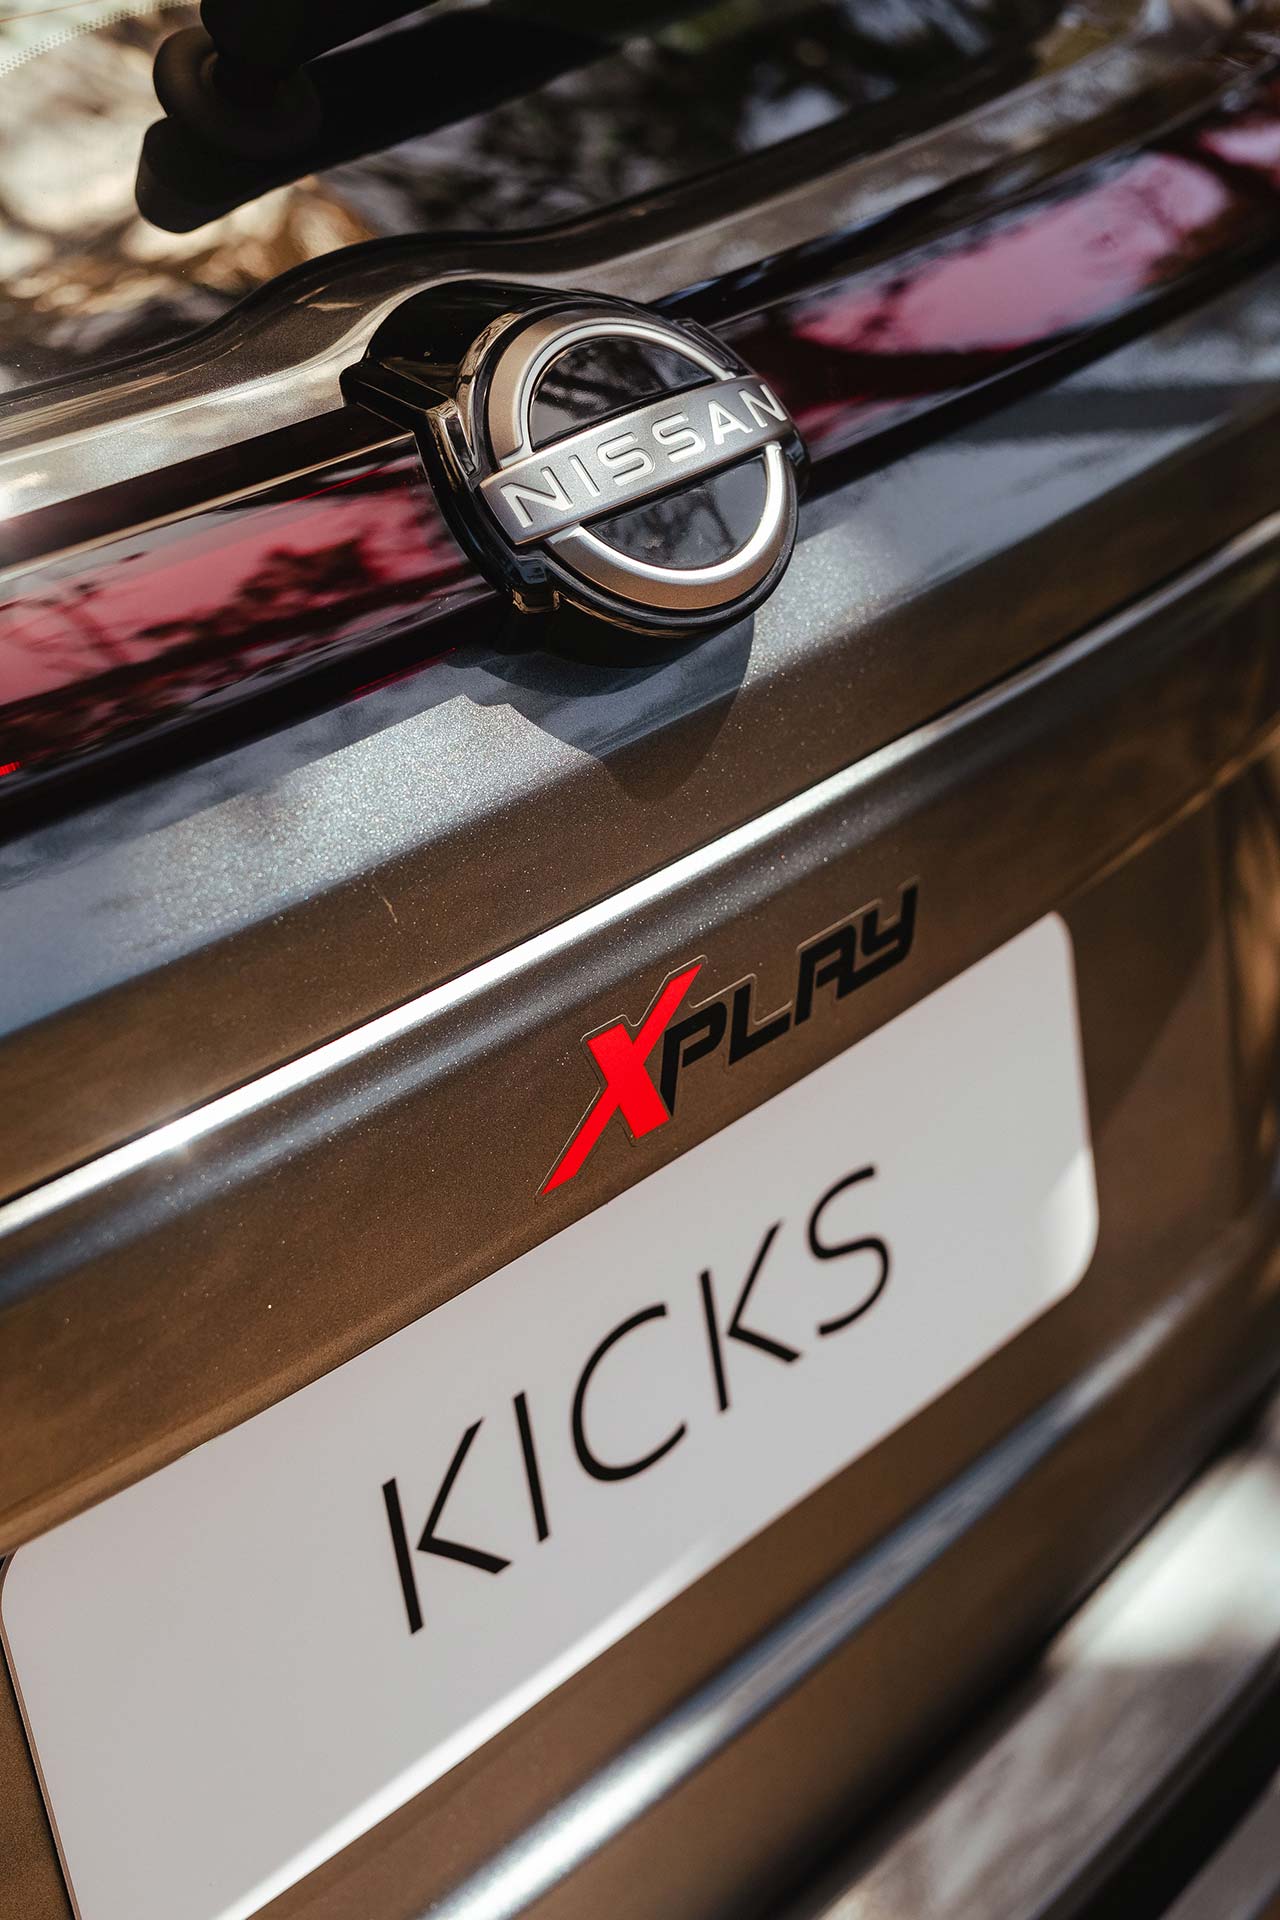 Nissan Kicks XPlay 2023